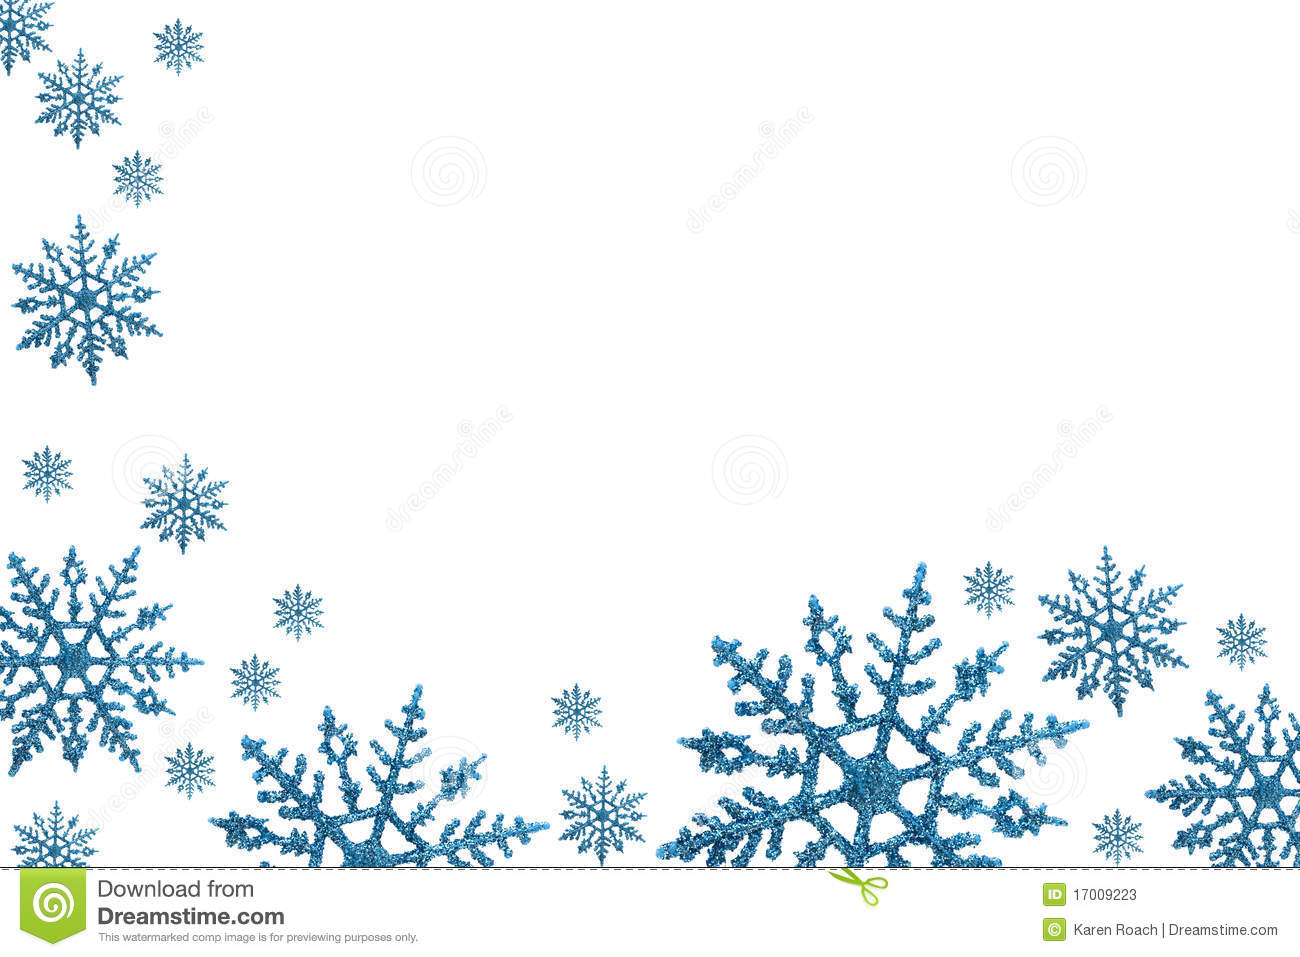 snowflake clipart jpg - photo #48